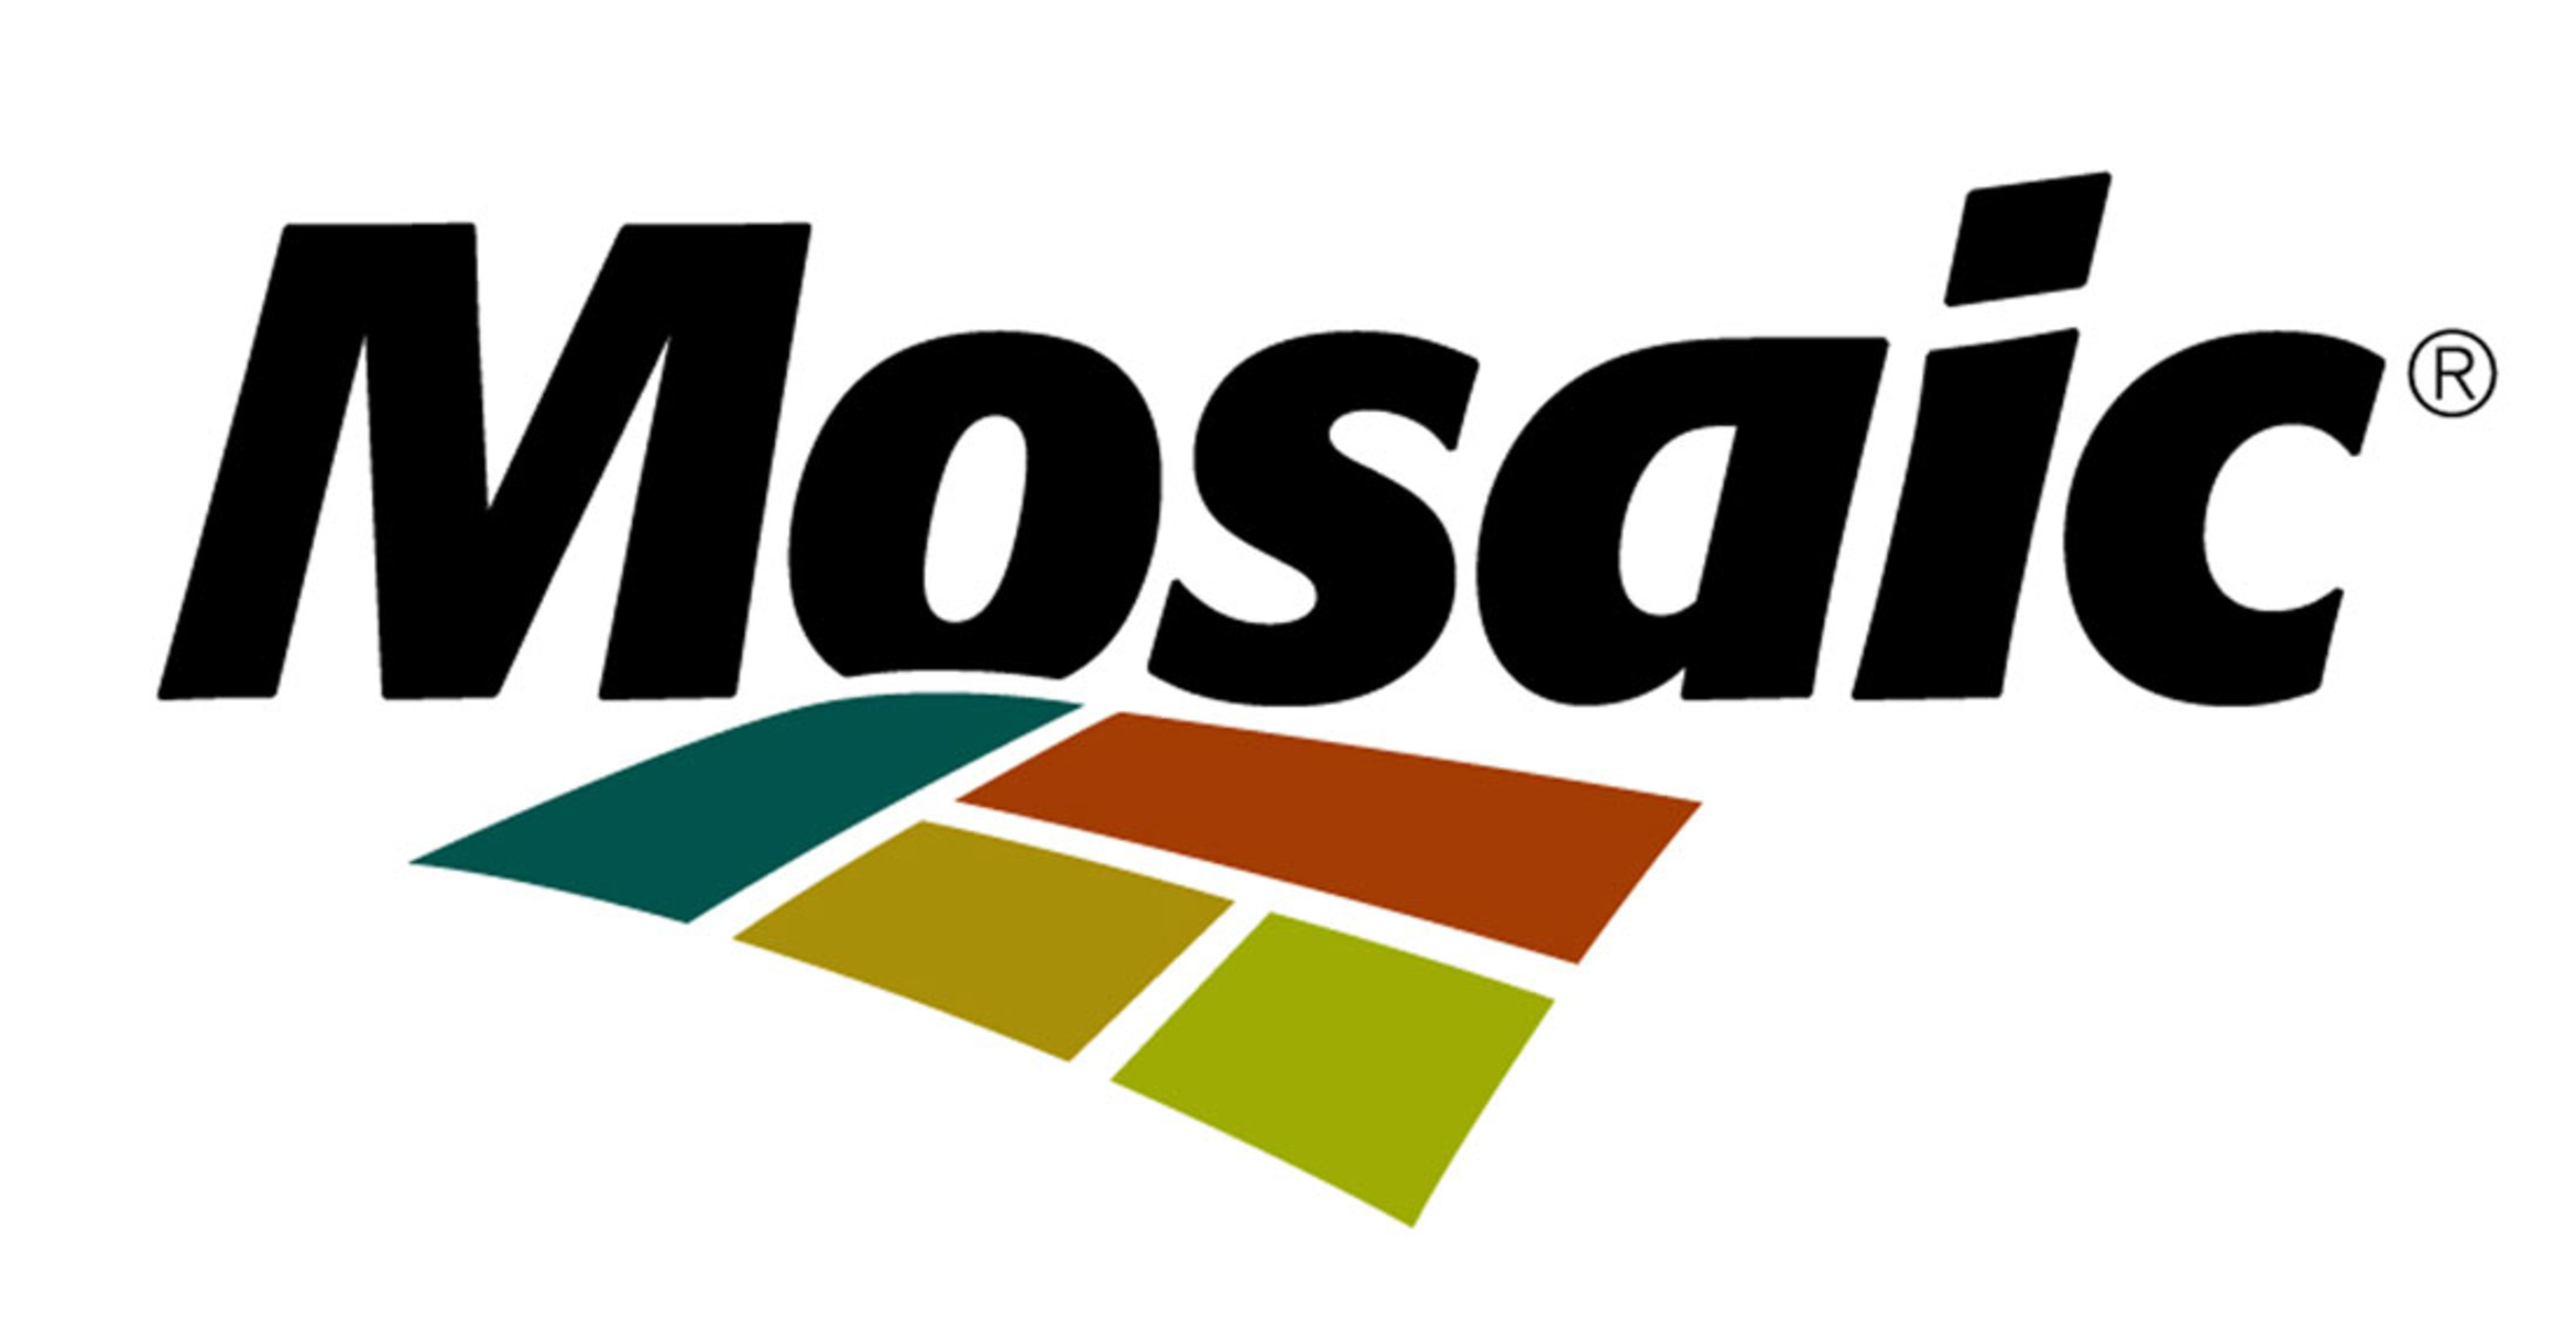 The Mosaic Company logo. (PRNewsFoto/THE MOSAIC CO) (PRNewsFoto/)